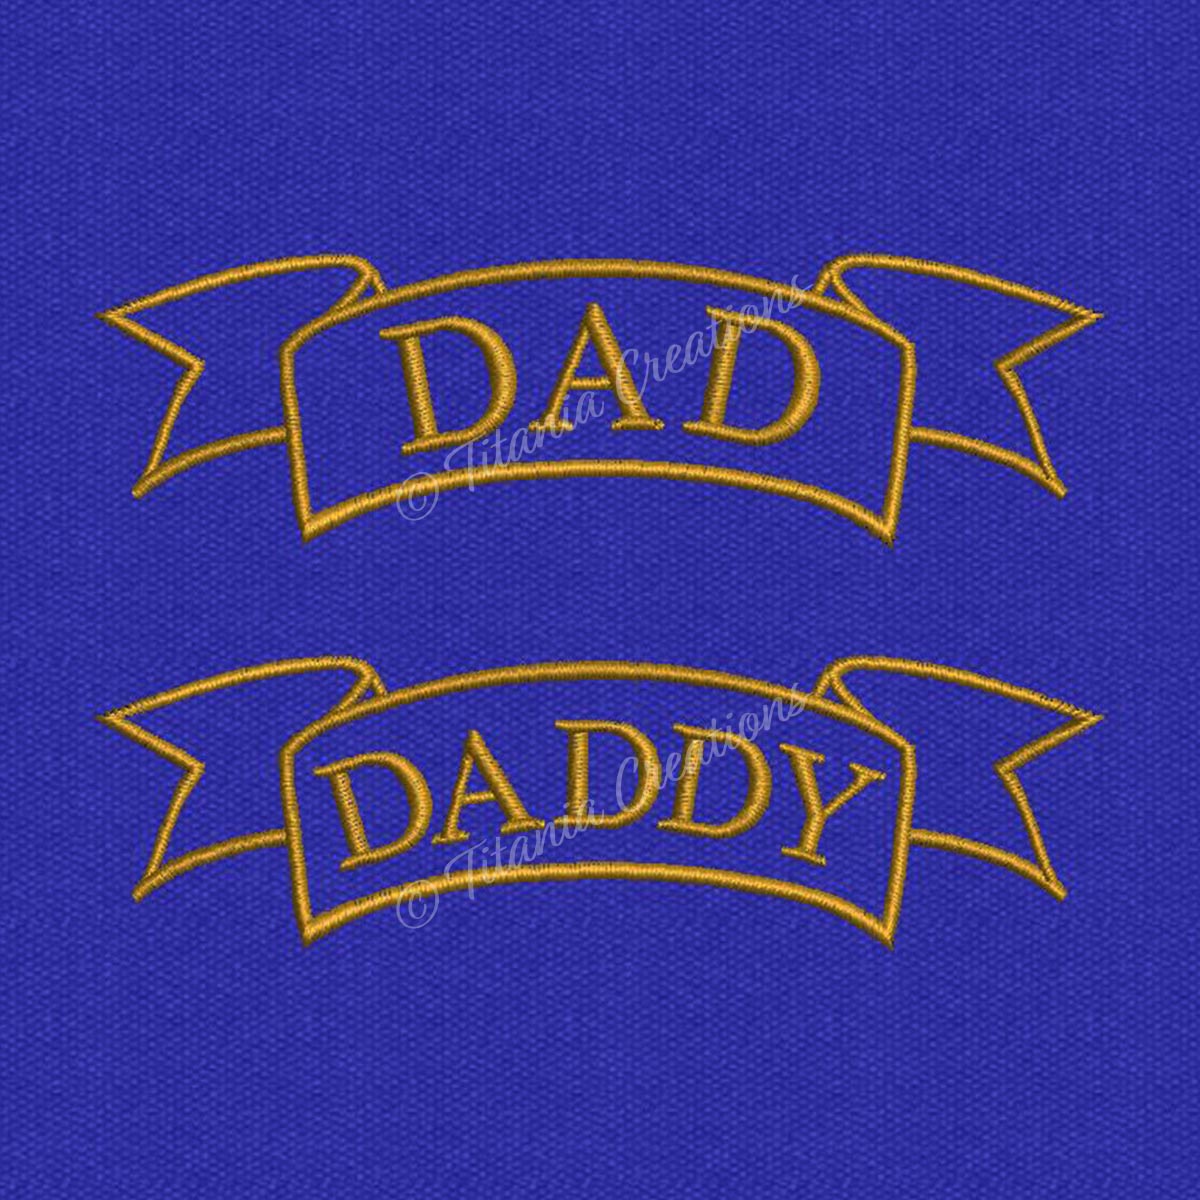 Dad / Daddy Banner 4x4